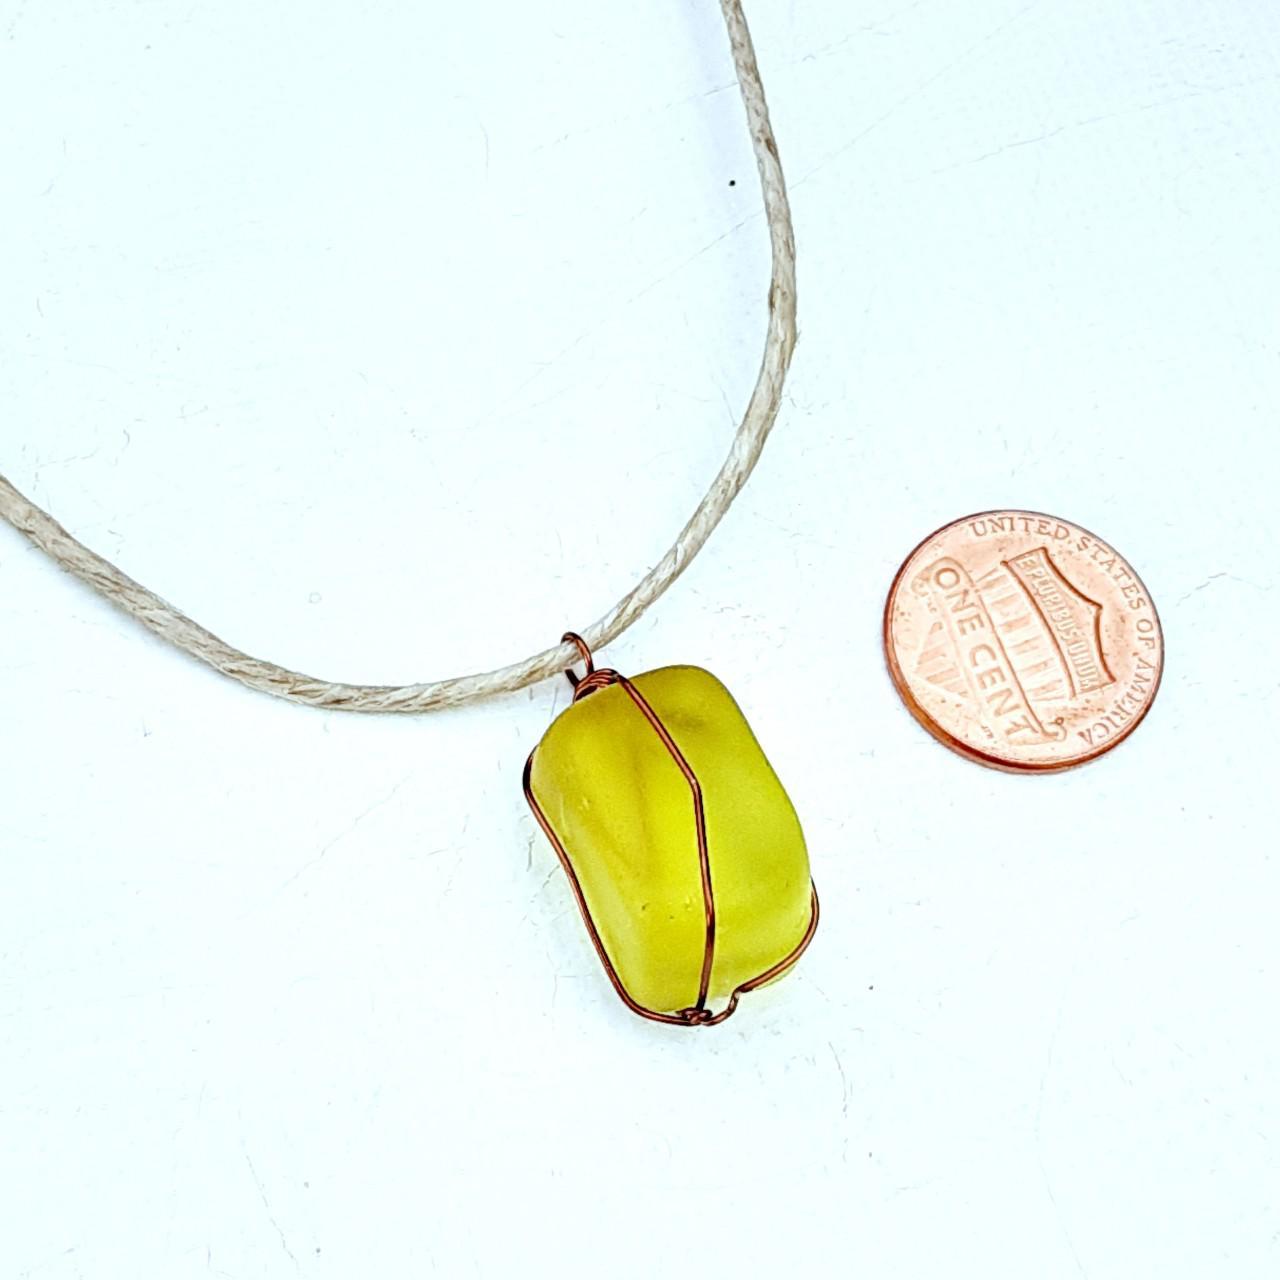 Product Image 3 - Hemp choker necklace. 
Bronze wire